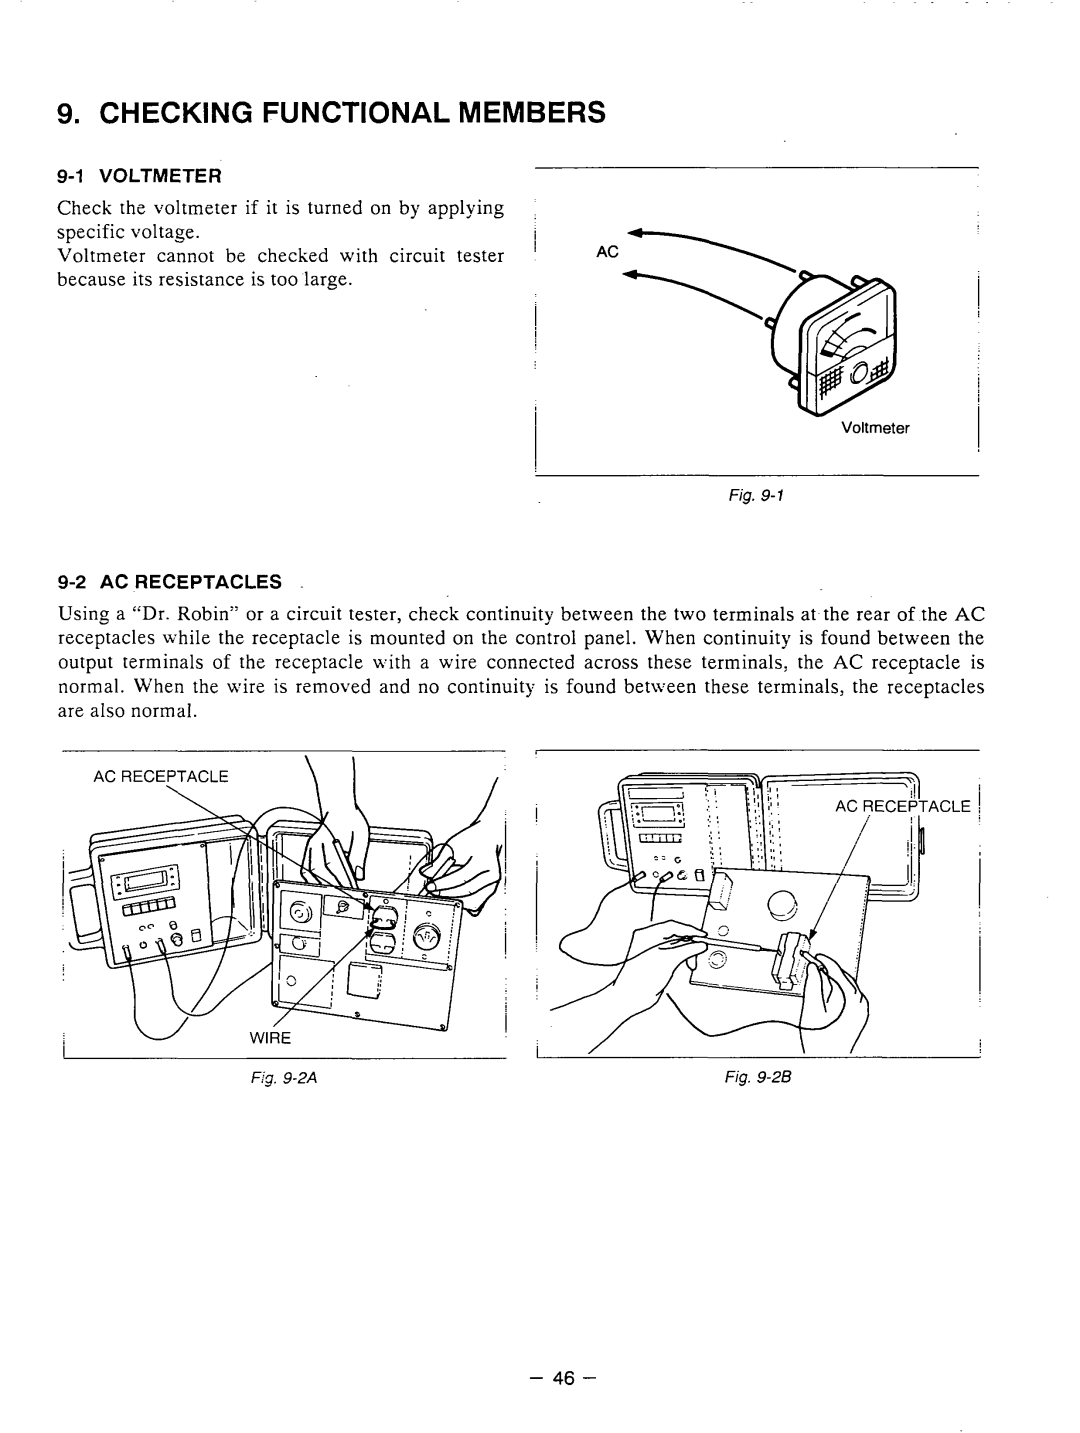 Subaru Robin Power Products RGX3510 manual Checkingfunctionalmembers 